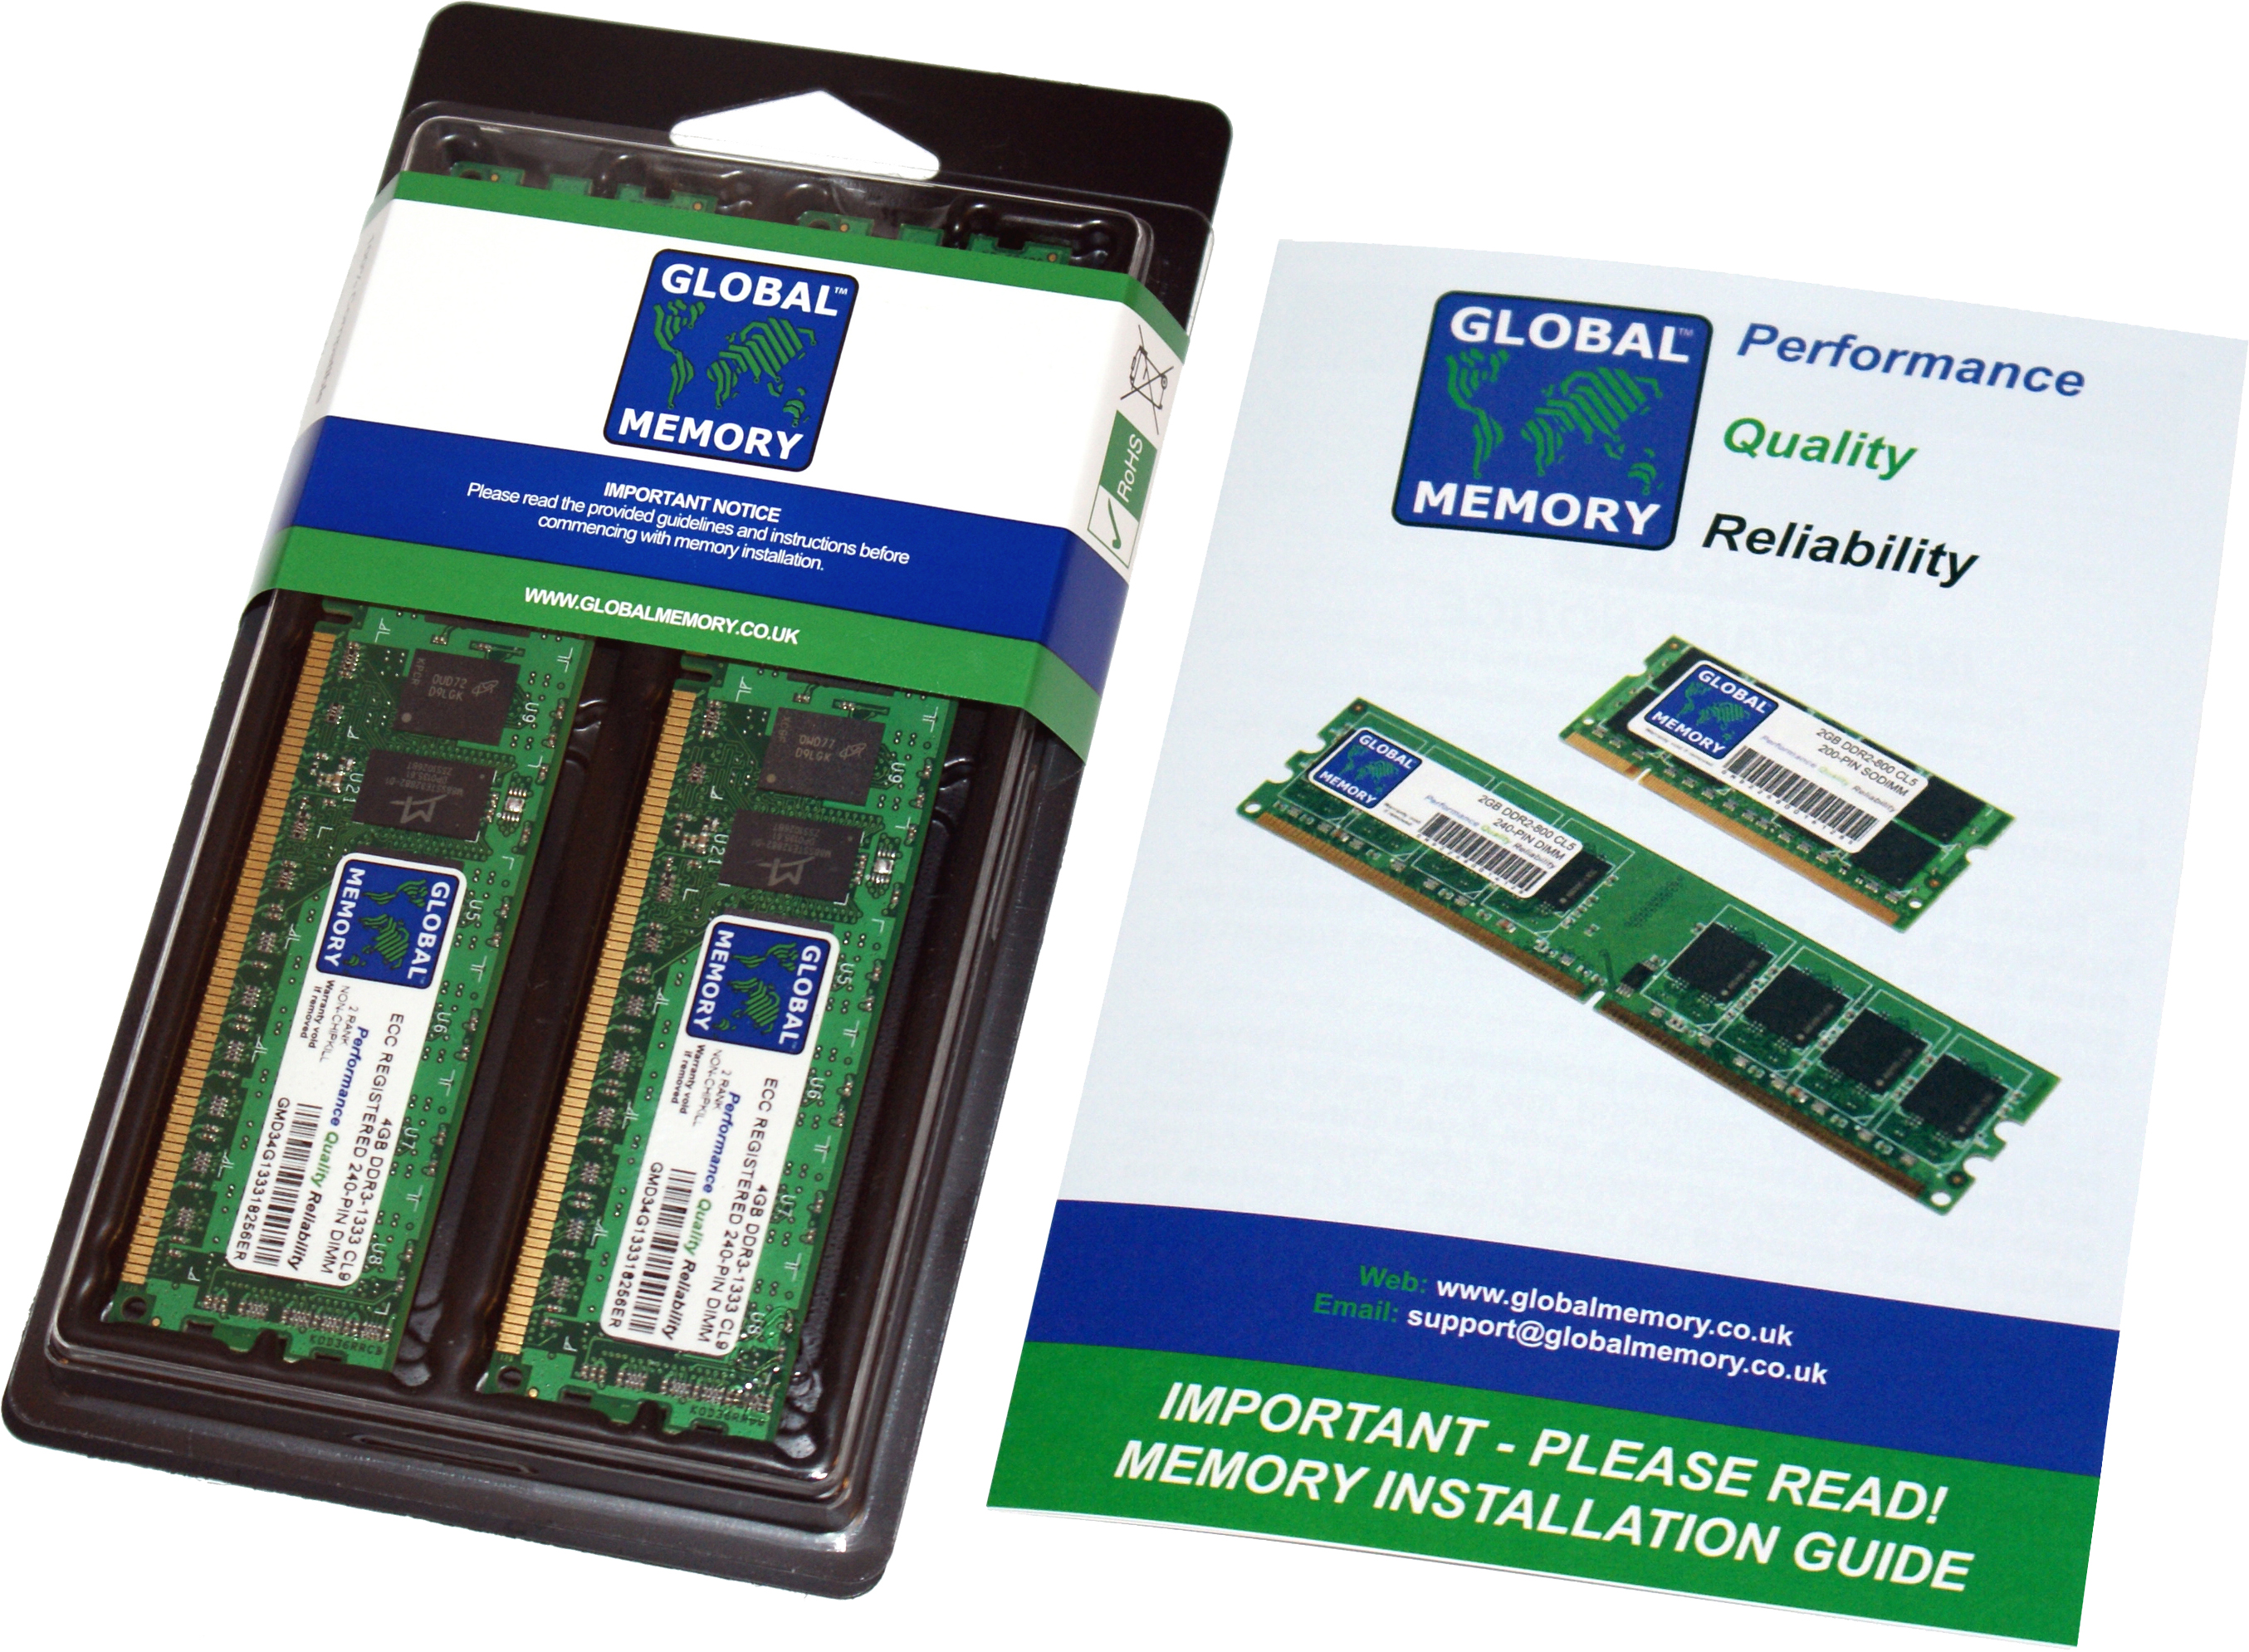 32GB (4 x 8GB) DDR4 3200MHz PC4-25600 288-PIN ECC REGISTERED DIMM (RDIMM) MEMORY RAM KIT FOR SUN SERVERS/WORKSTATIONS (4 RANK KIT CHIPKILL)